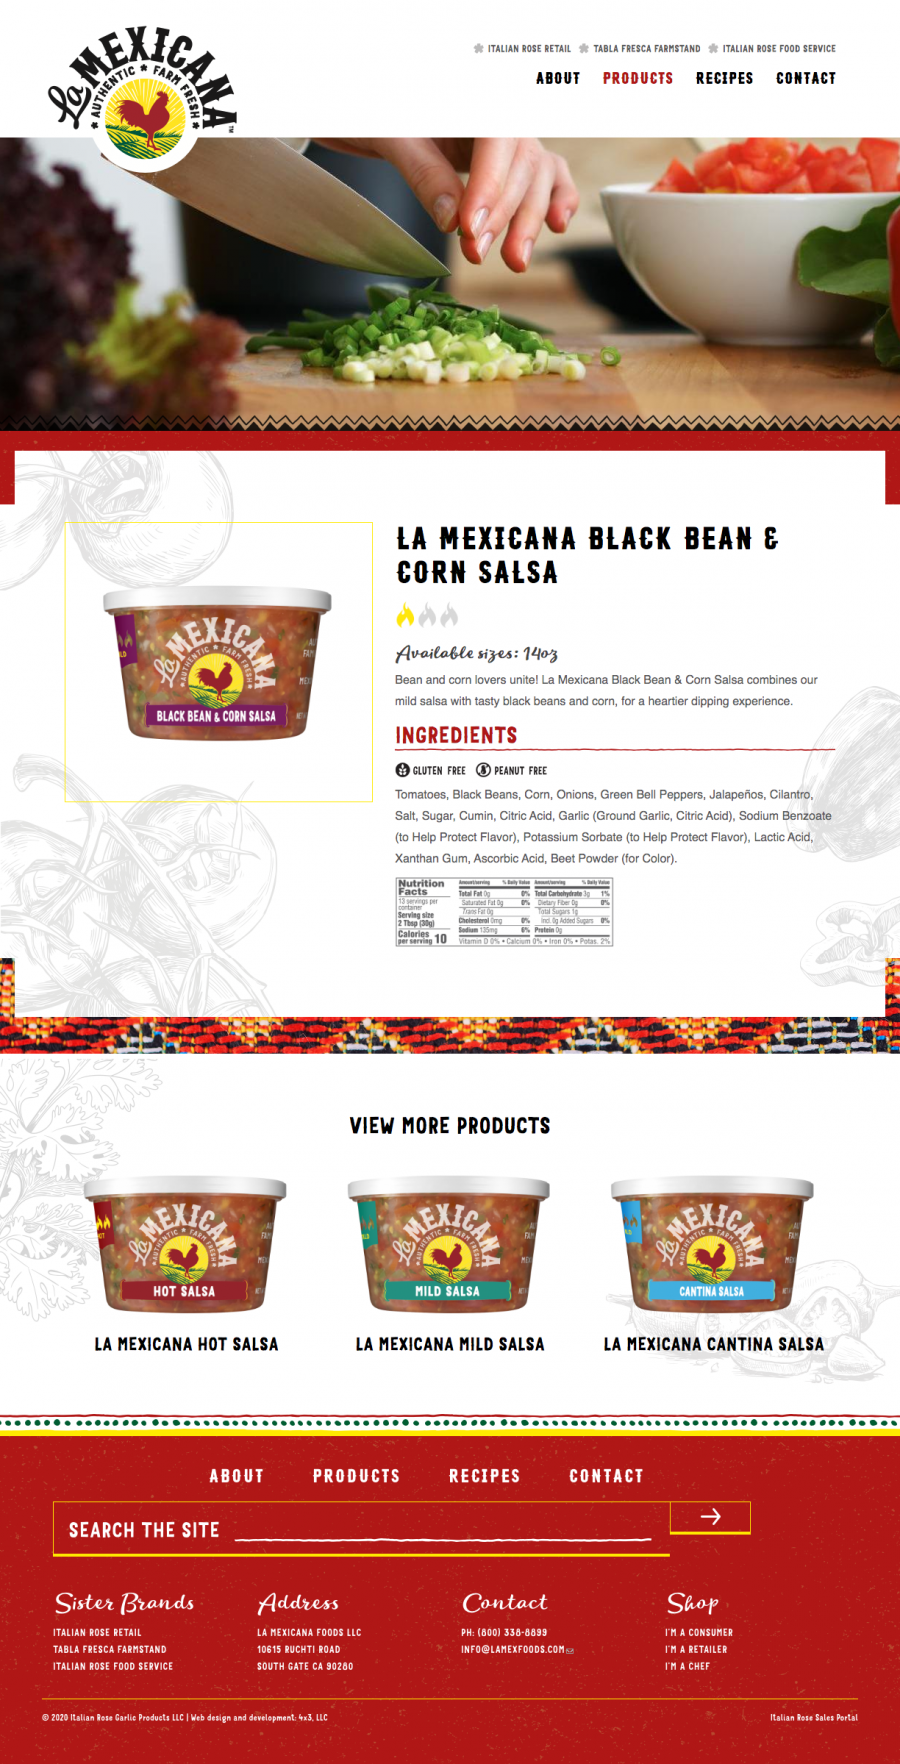 La Mexicana product page